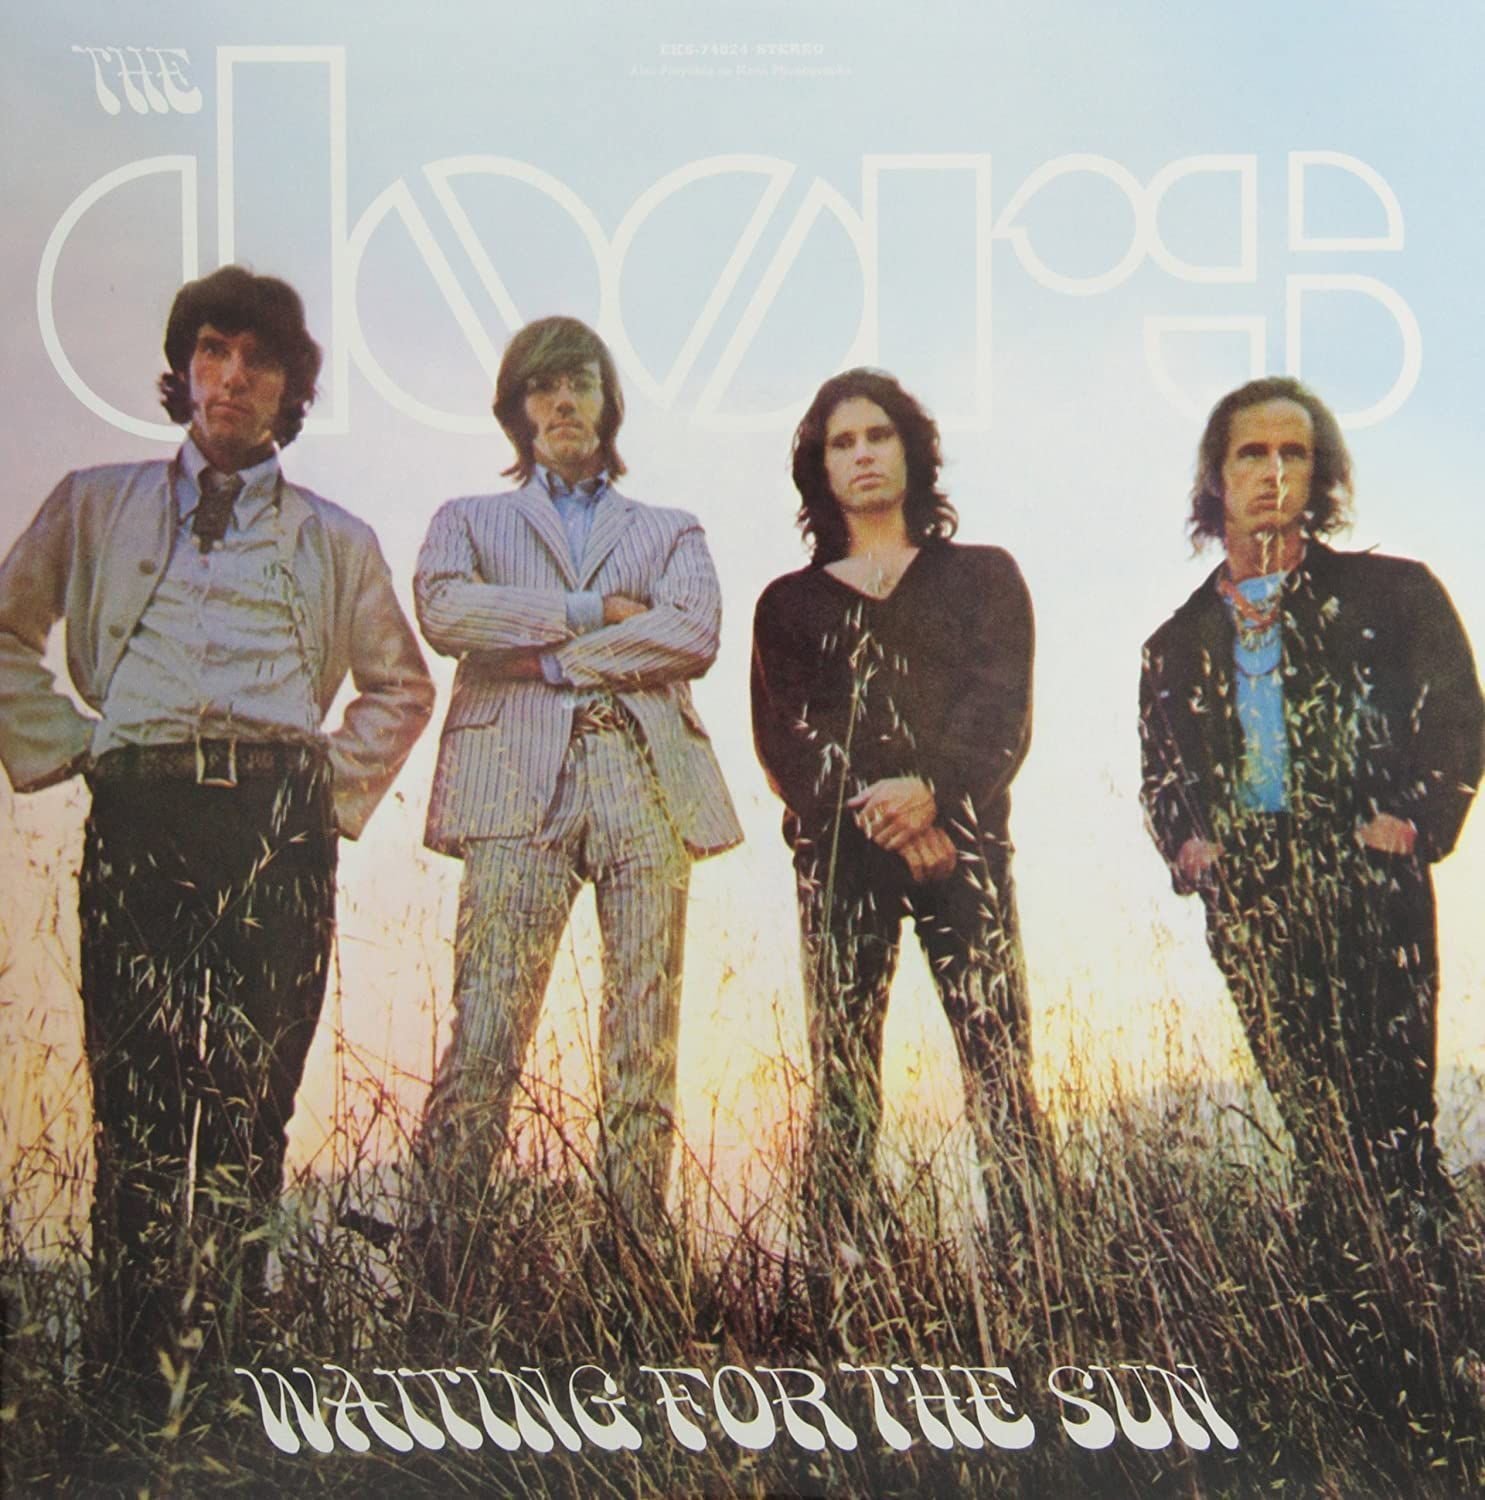 The Doors - Waiting For The Sun (LP) The Doors